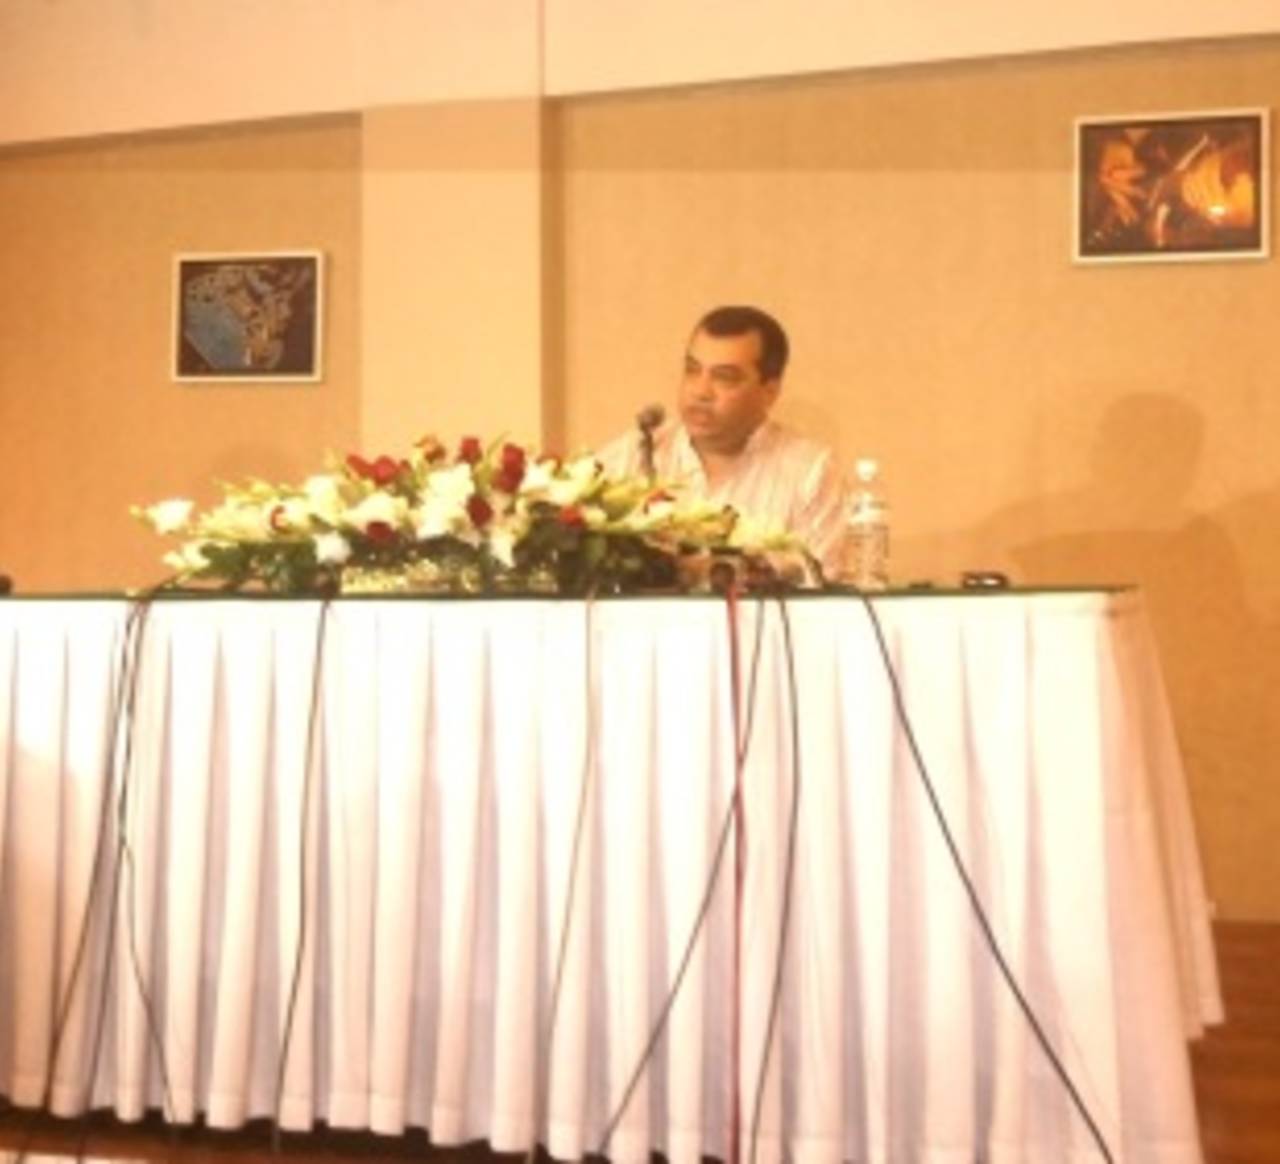 Former BCB president Saber Hossain Chowdhary, Dhaka, Decemeber 18, 2012